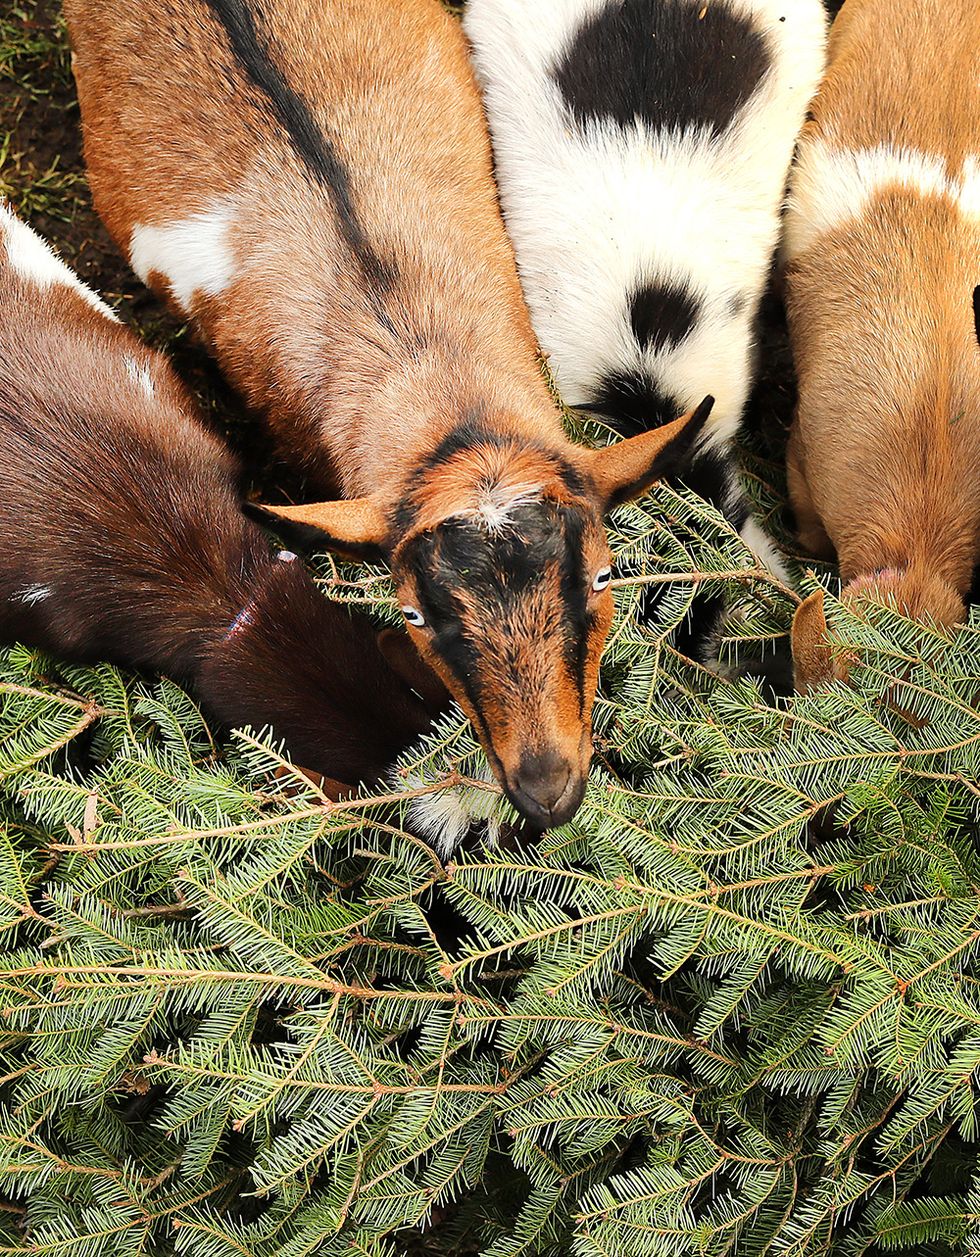 goats eating christmas trees